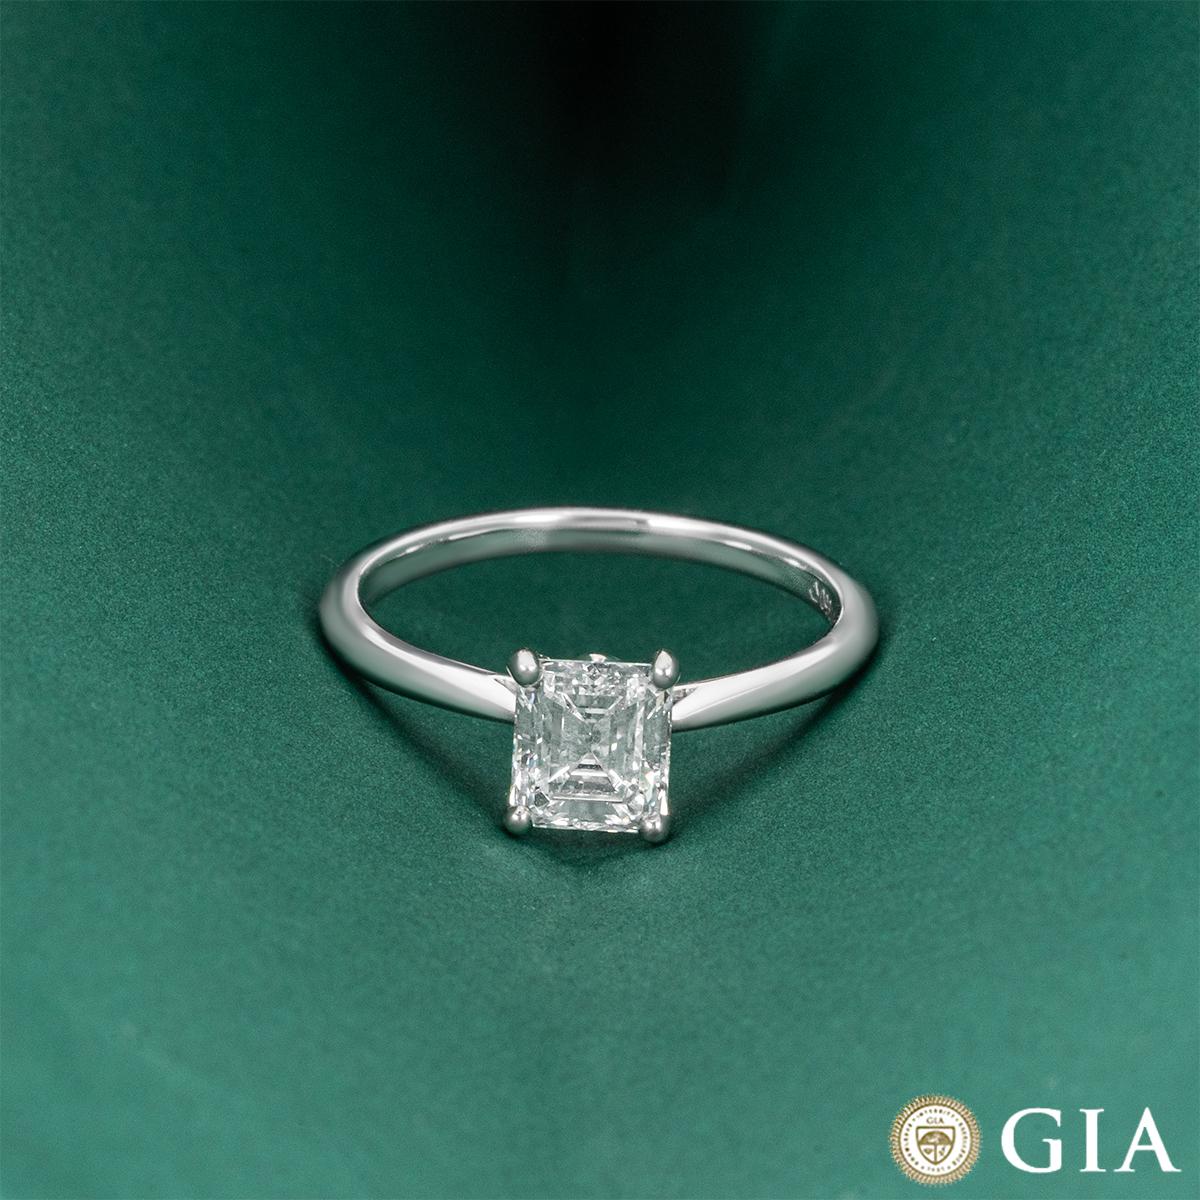 GIA Certified Platinum Emerald Cut Diamond Engagement Ring 1.03Carat E/VVS2 For Sale 3